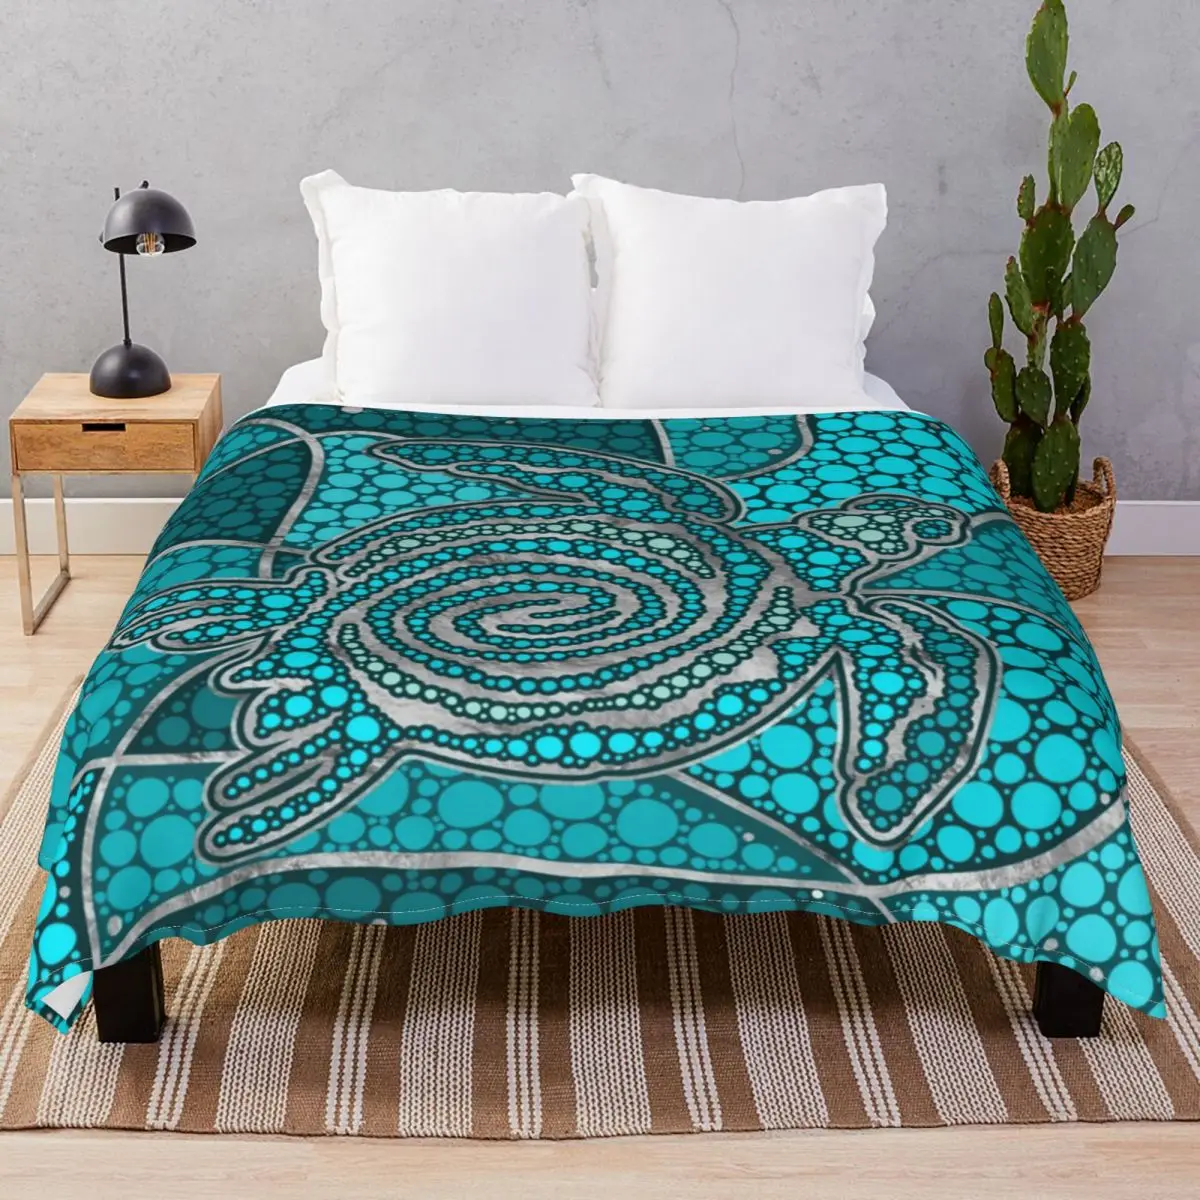 Turtle Aboriginal Dot Art Blankets Fleece Spring Autumn Multi-function Throw Blanket for Bedding Sofa Travel Office